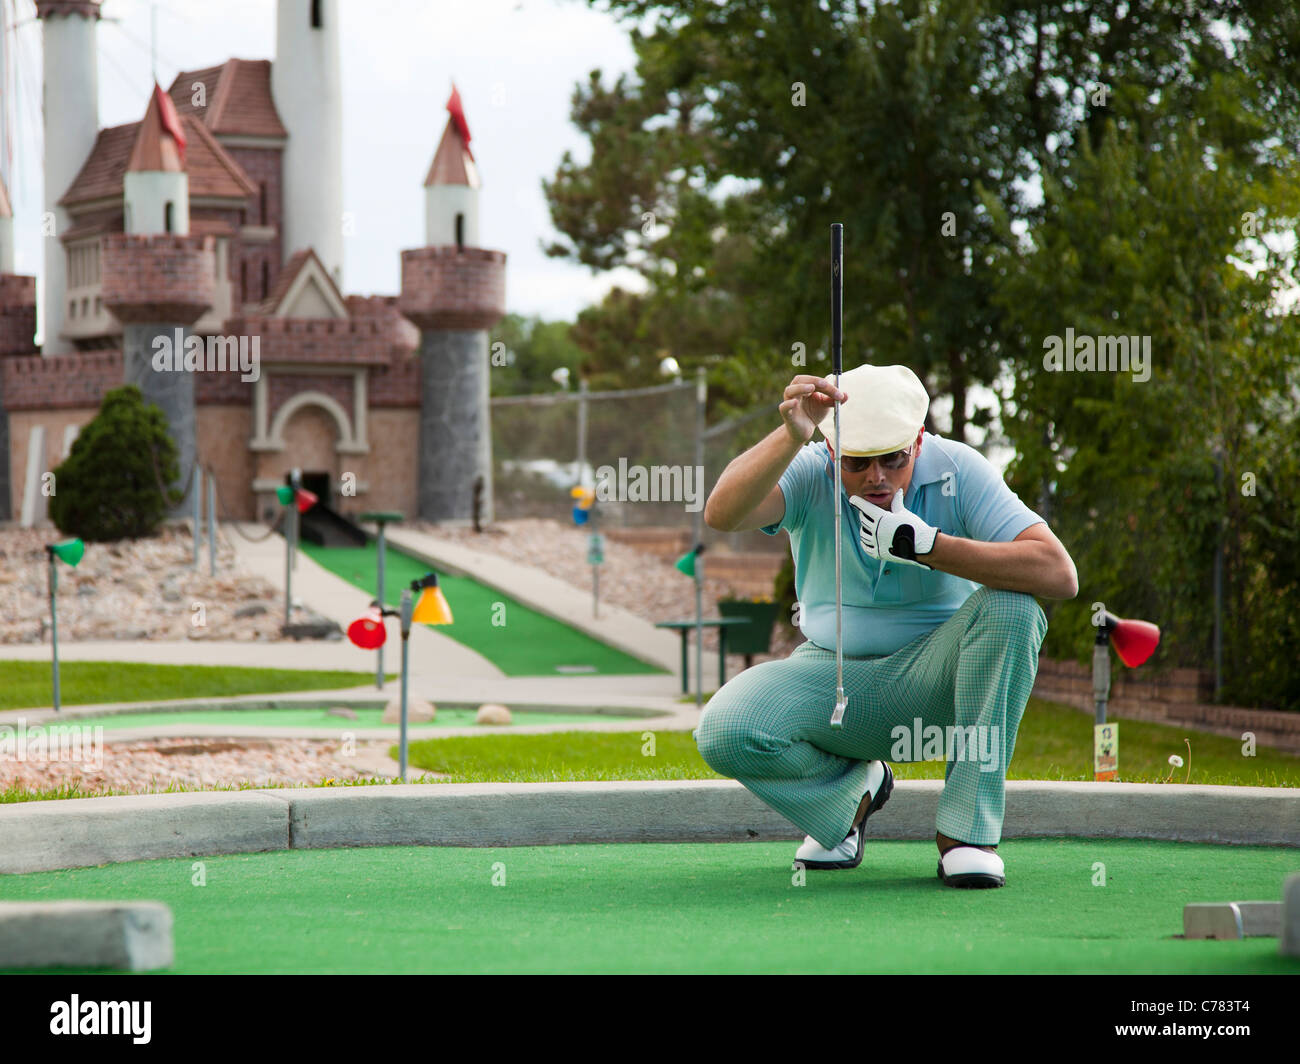 USA, Utah, Orem, Man lining up shot on miniature golf course Stock Photo